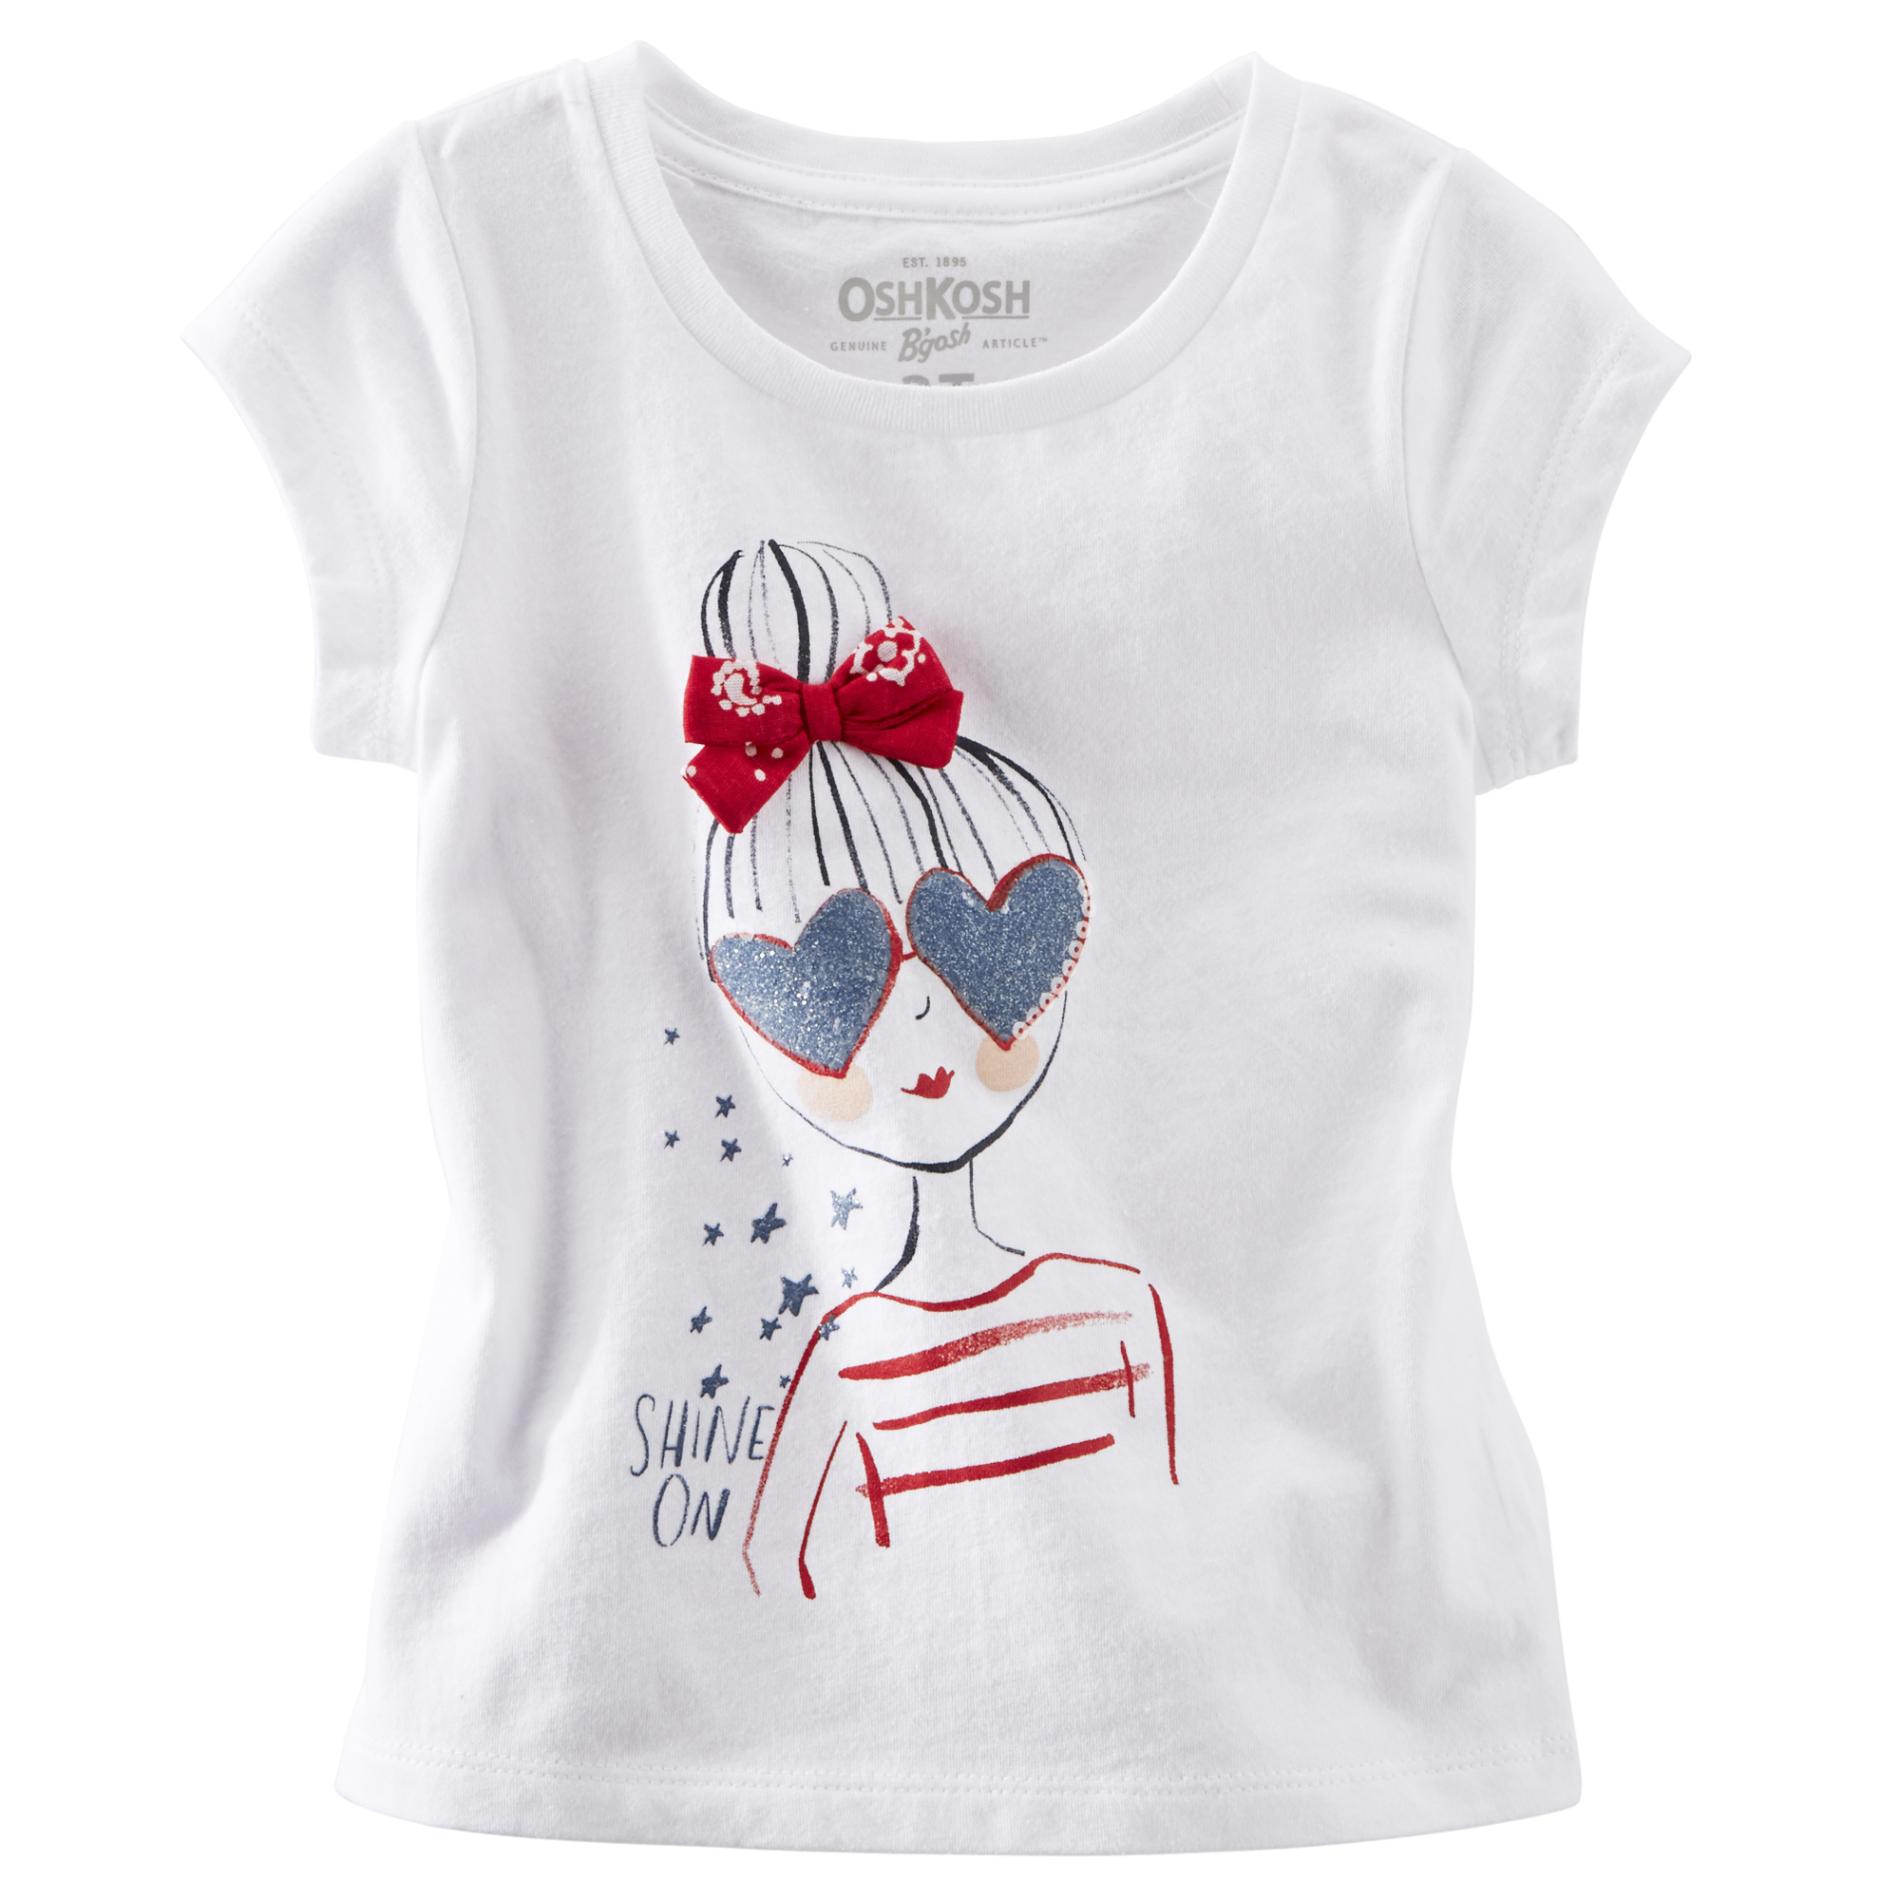 OshKosh Toddler Girl's Graphic T-Shirt - Shine On